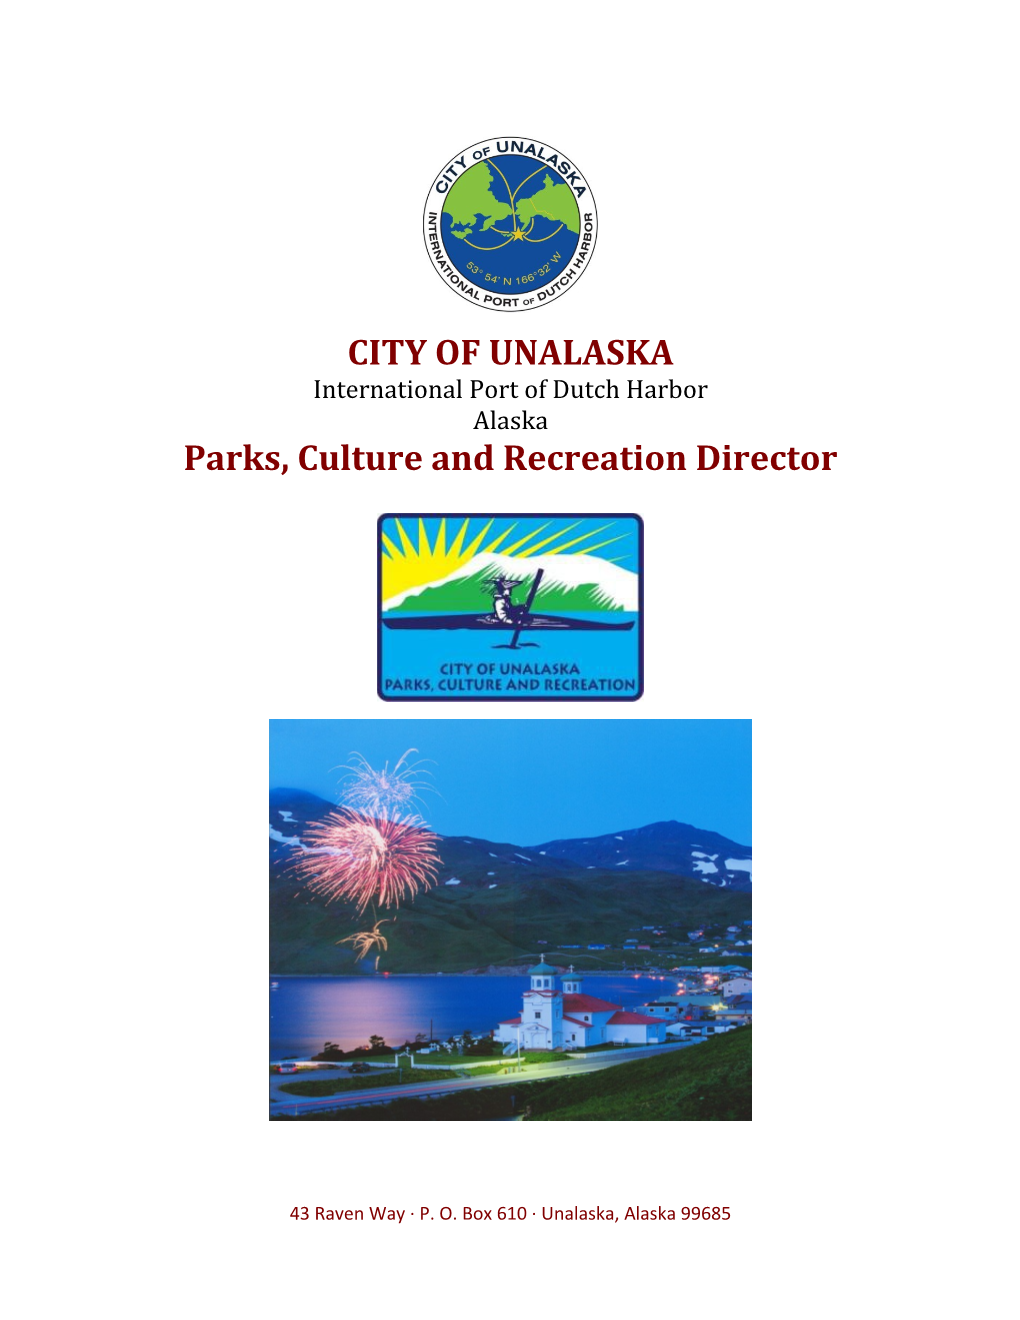 Parks, Culture and Recreation Director - City of Unalaska, International Port of Dutch